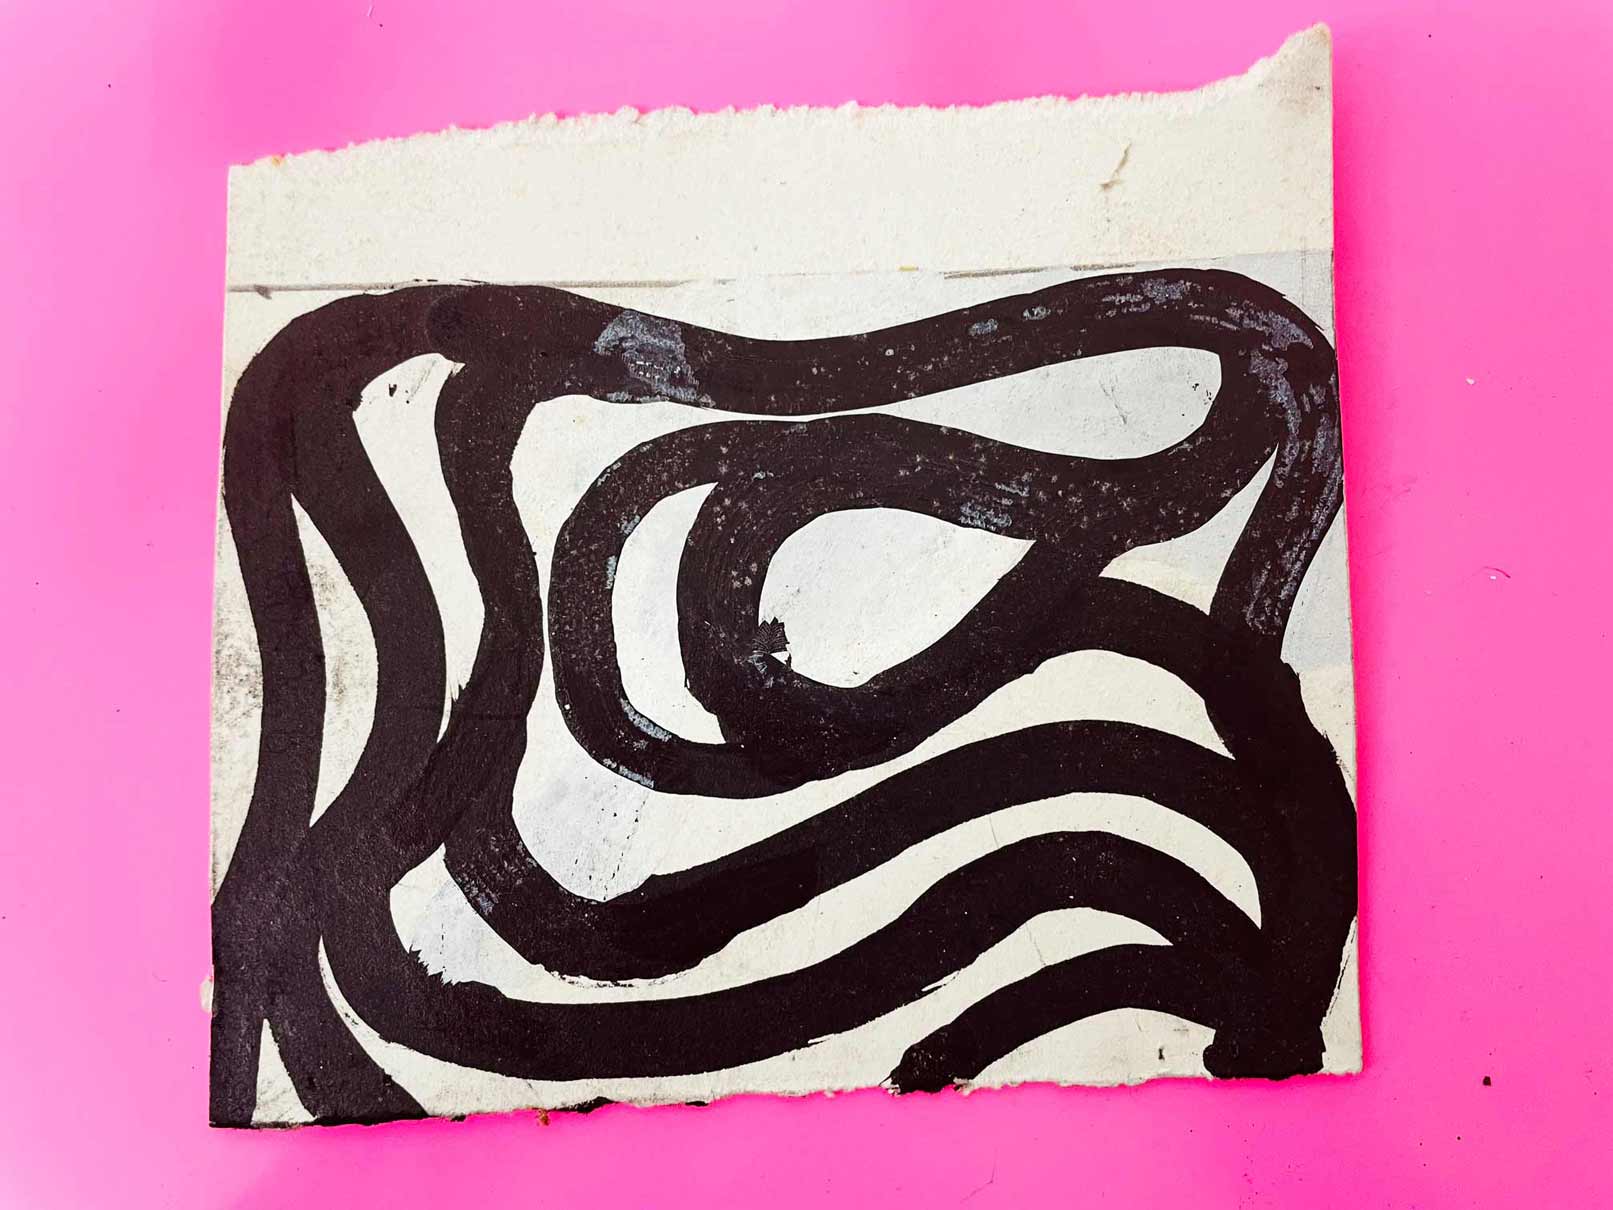 Sol LeWitt's Found Brush Marks, on Pink Plastic, Chester studio 2022. Photo Irene Barberis © Irene Barberis 2022